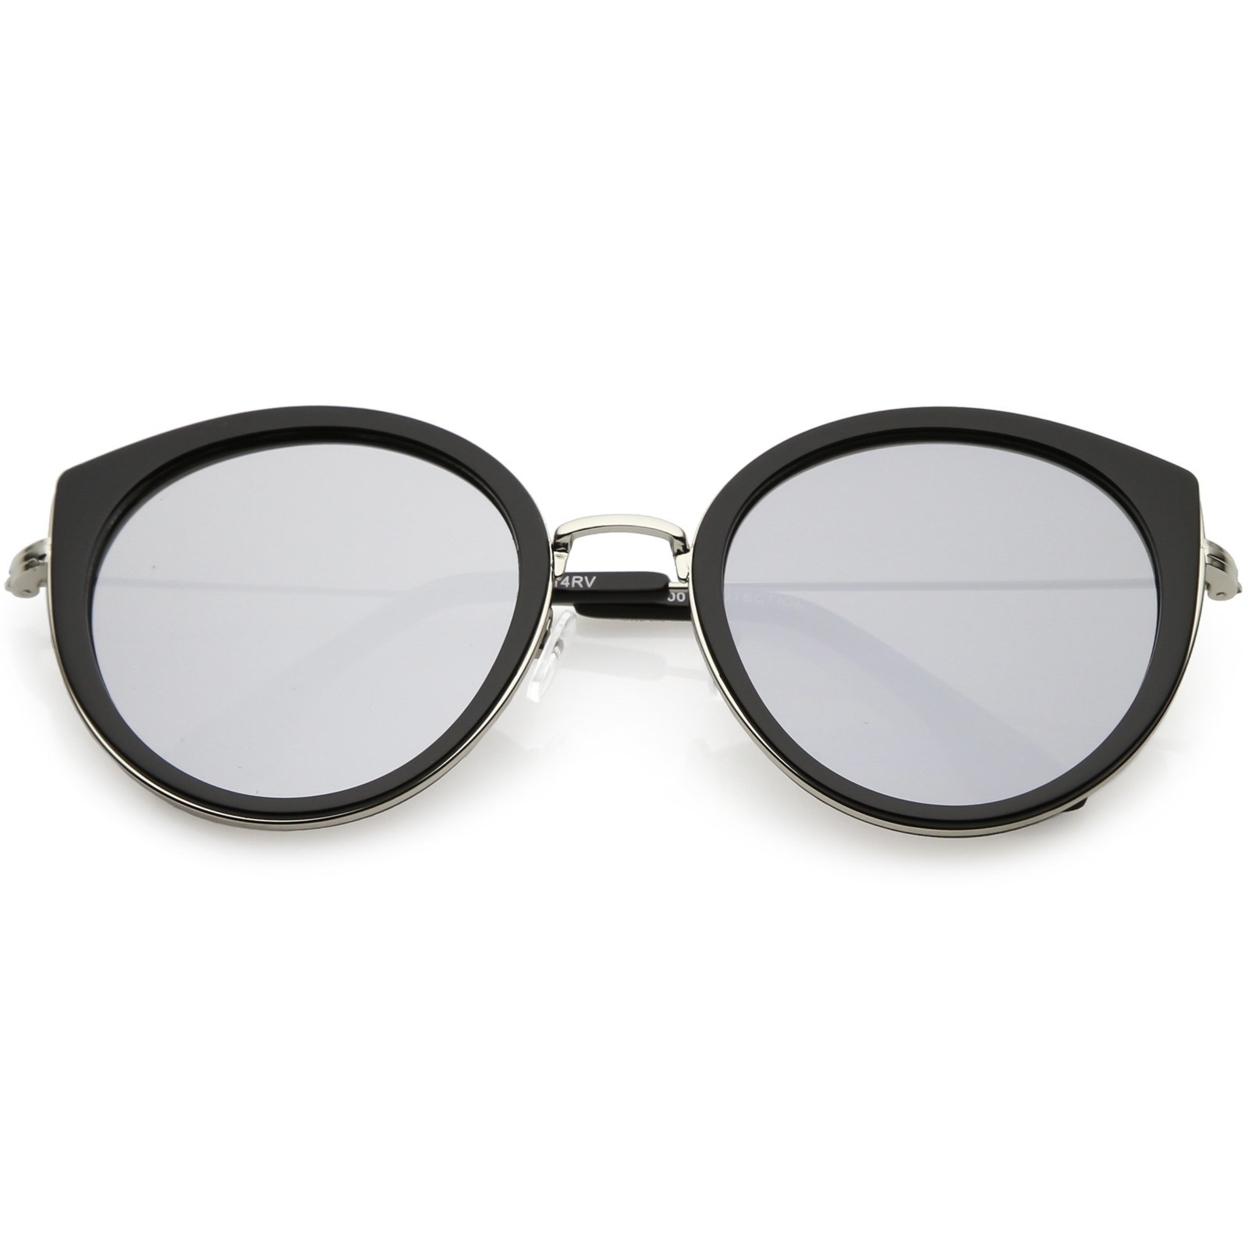 Modern Cat Eye Sunglasses Metal Trim Round Colored Mirror Flat Lens 53mm - Black Gold / Blue Mirror